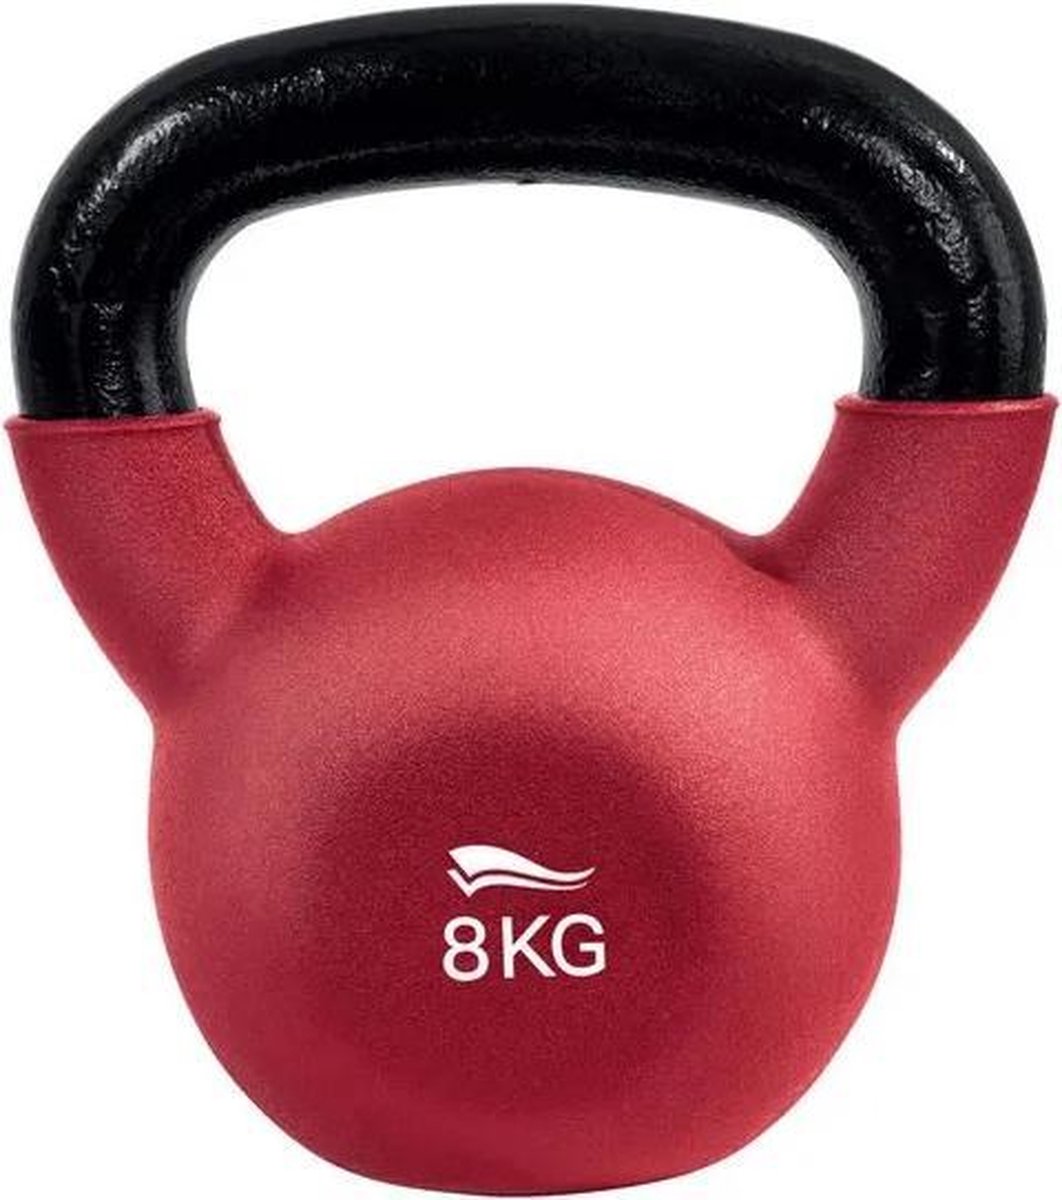 Kettlebell - Kettlebell 8 KG - Kettlebell Gietijzer - Kettlebell - focus fitness